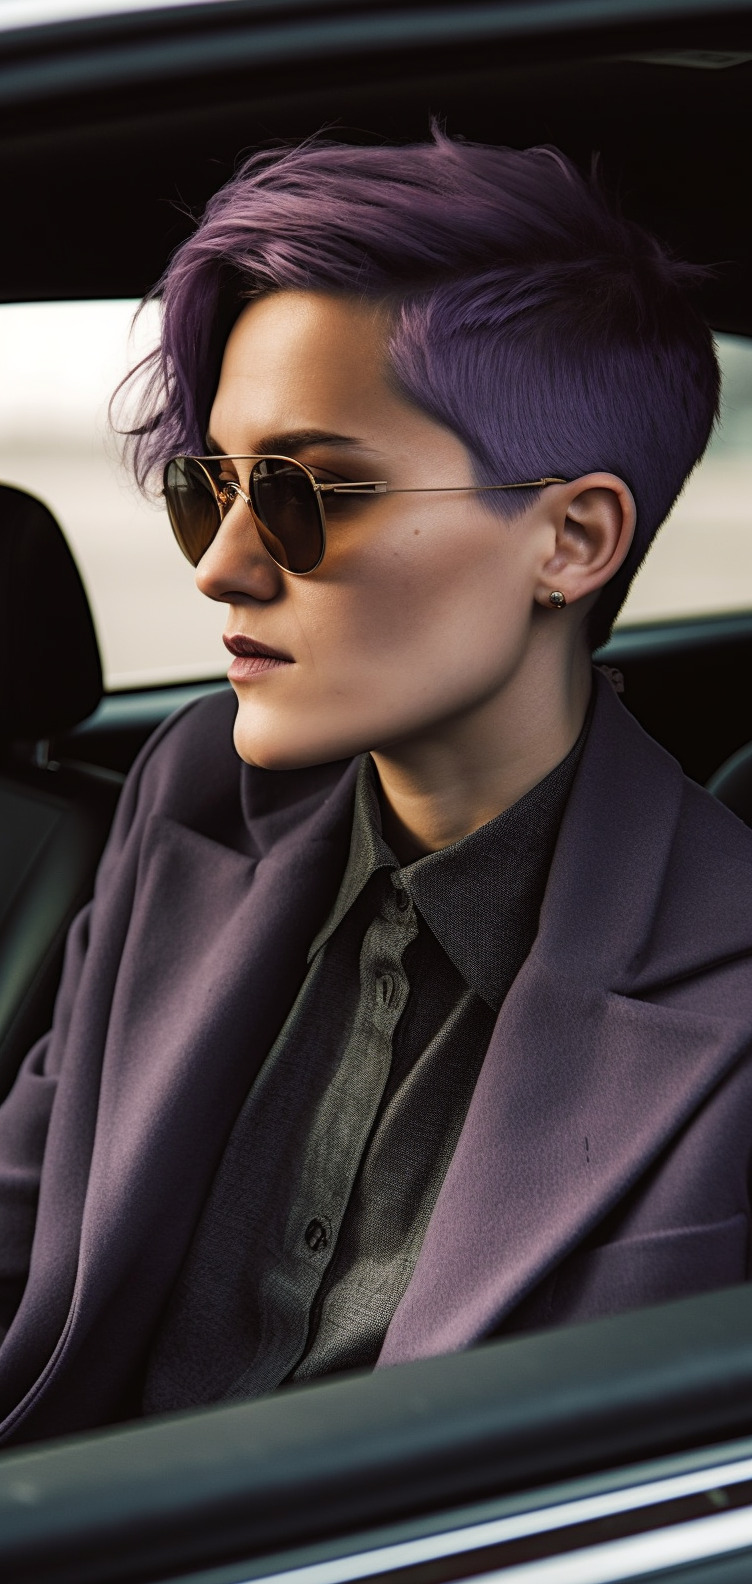 Jen_Palmer_woman_with_purple_hair_sitting_in_a_car_in_the_style_0371d277-98fa-48eb-a88e-b9aff8f2b2ce.png